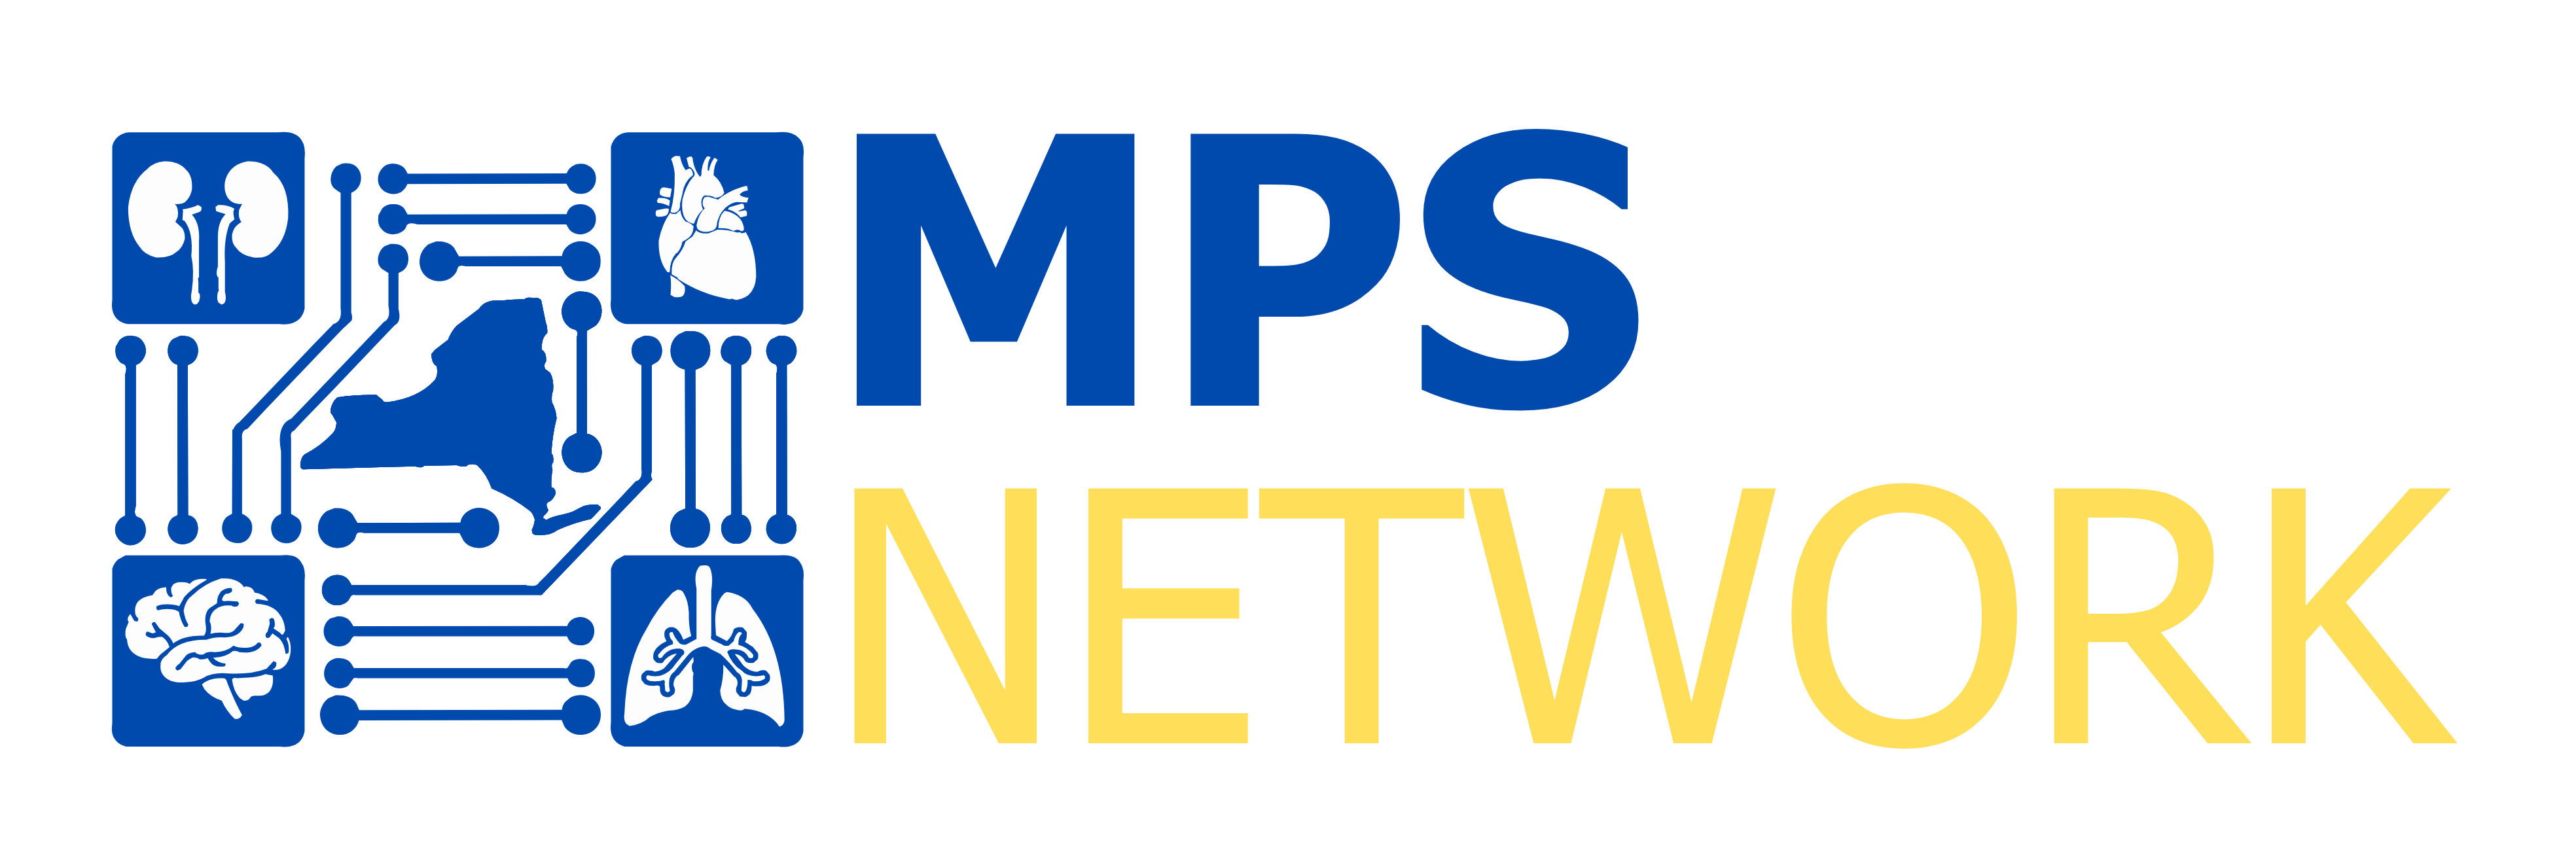 mps-network-logo-v2-horizontal-transparent.png